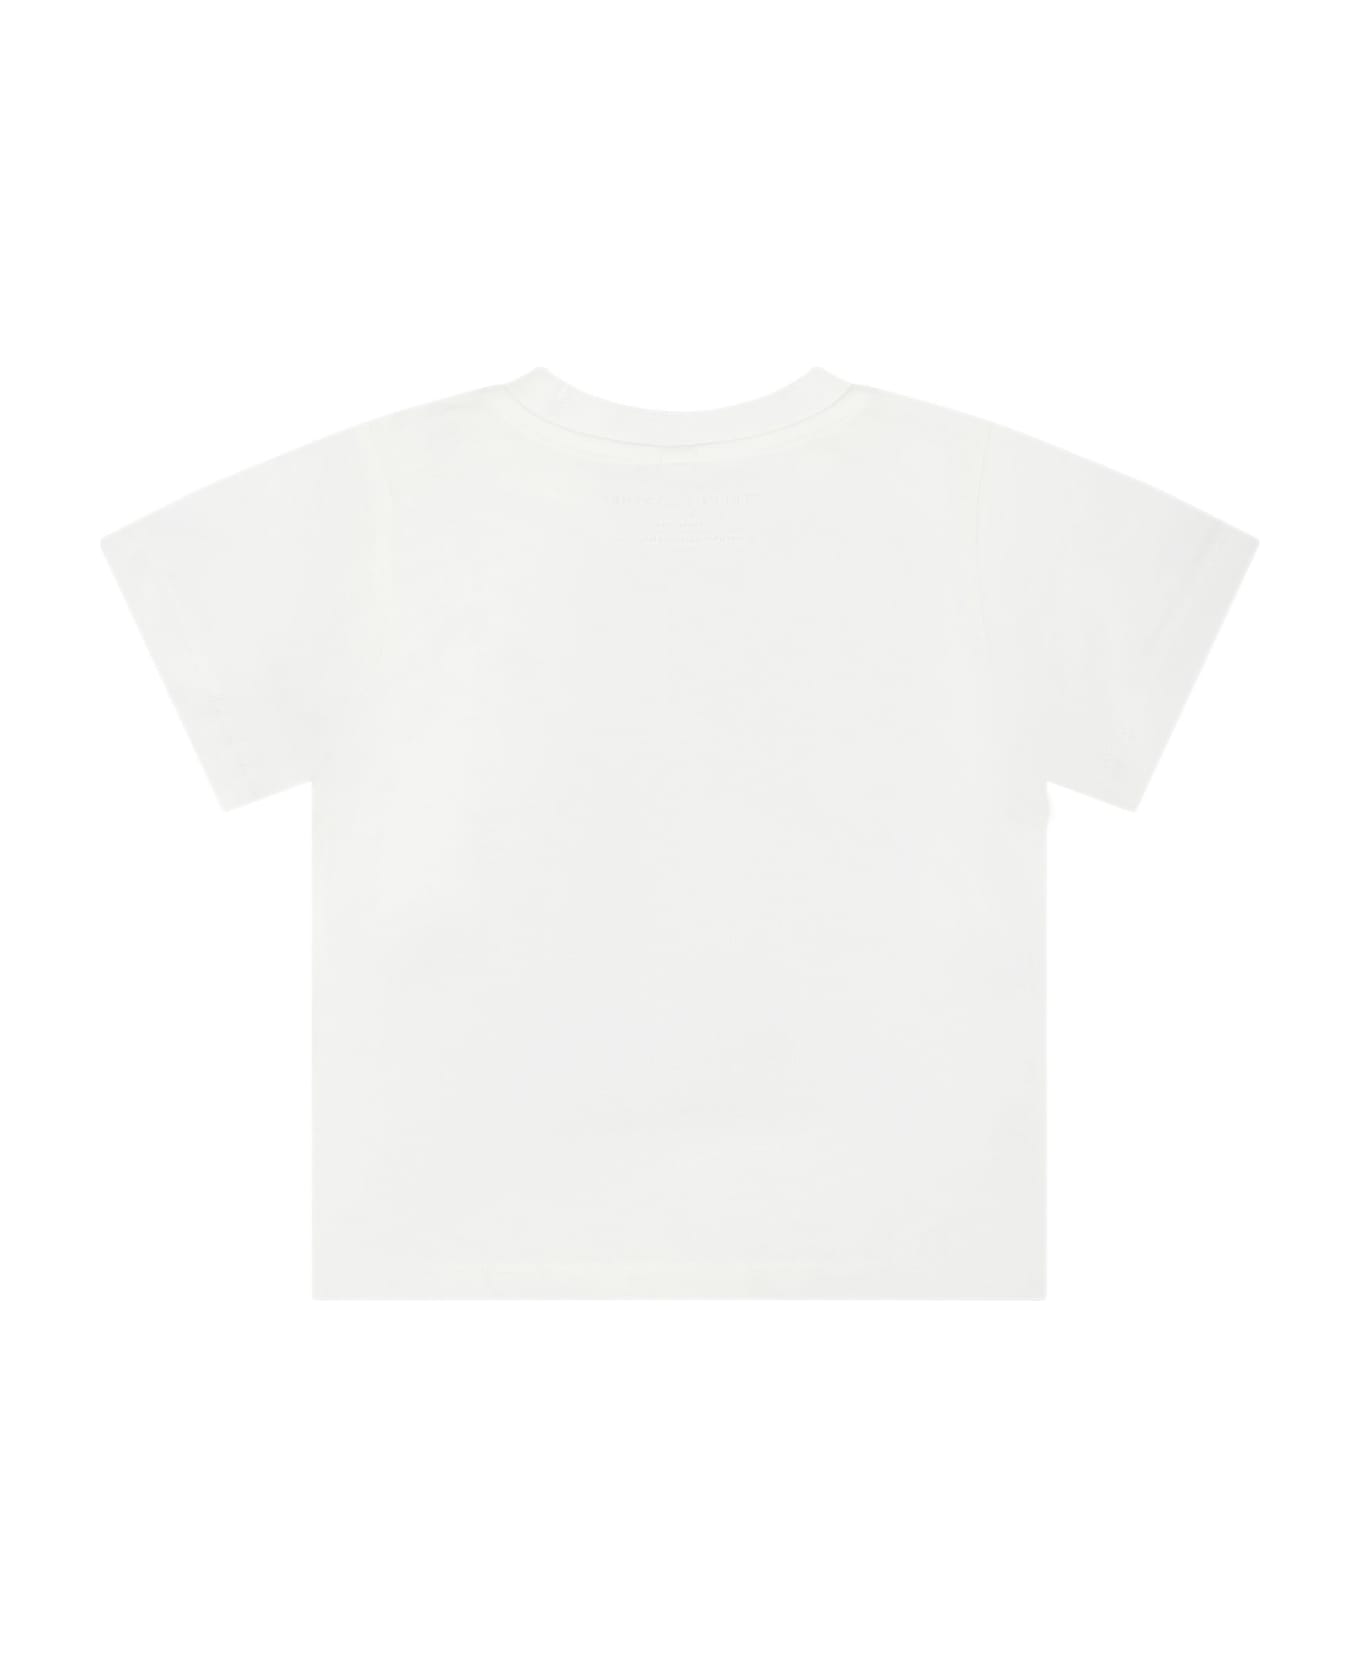 Stella McCartney Kids White T-shirt For Baby Boy With Hammerhead Shark - White